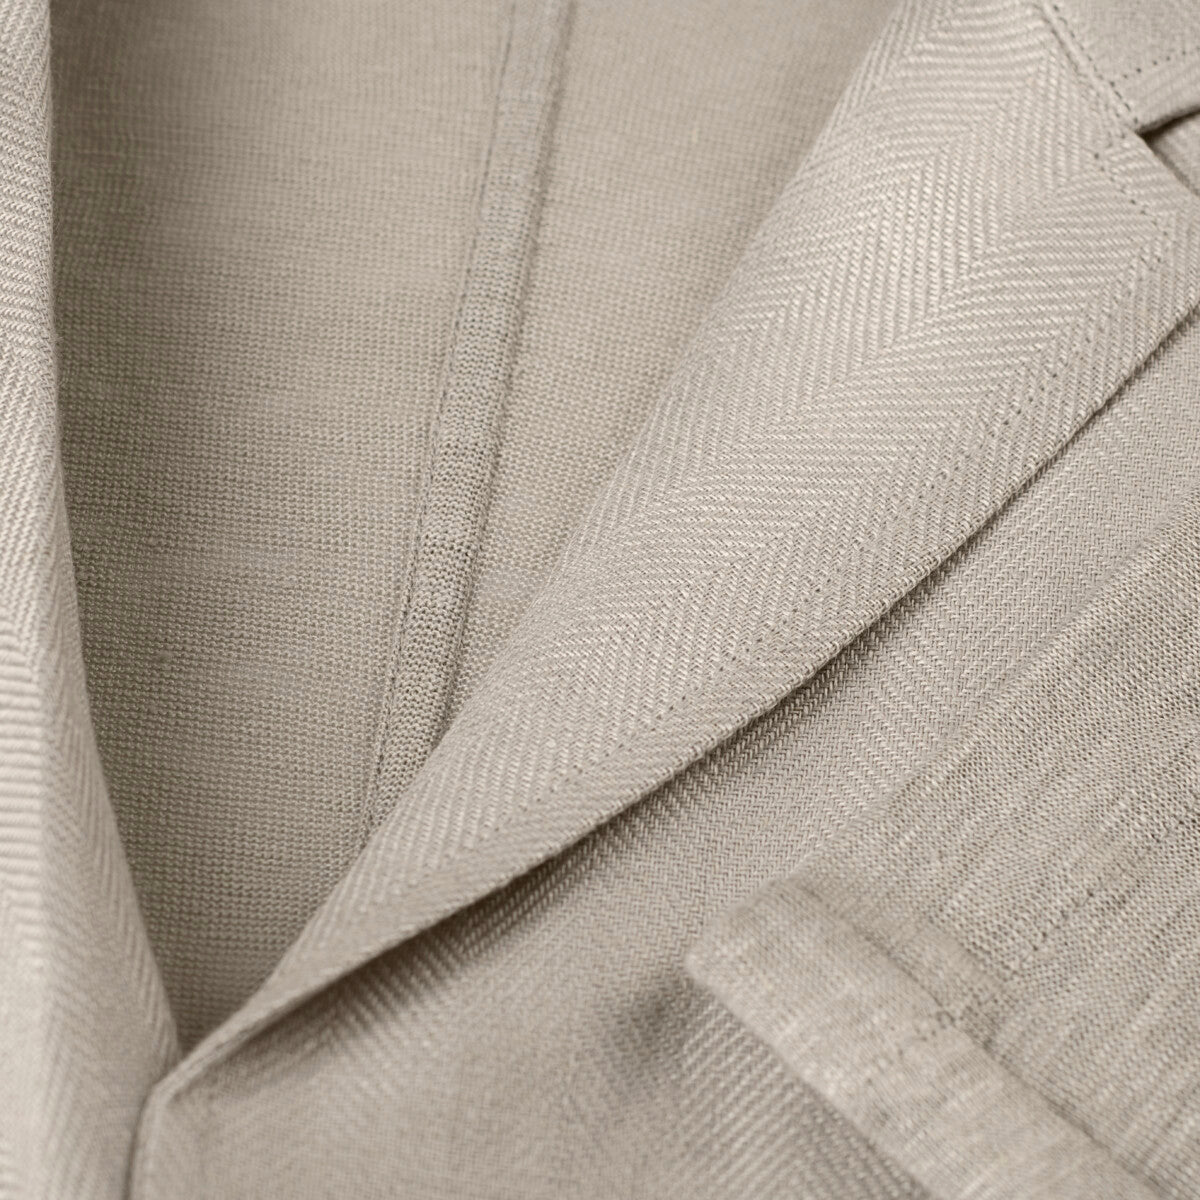 Giacca Sud Woman 100% Capri natural color linen jacket detail